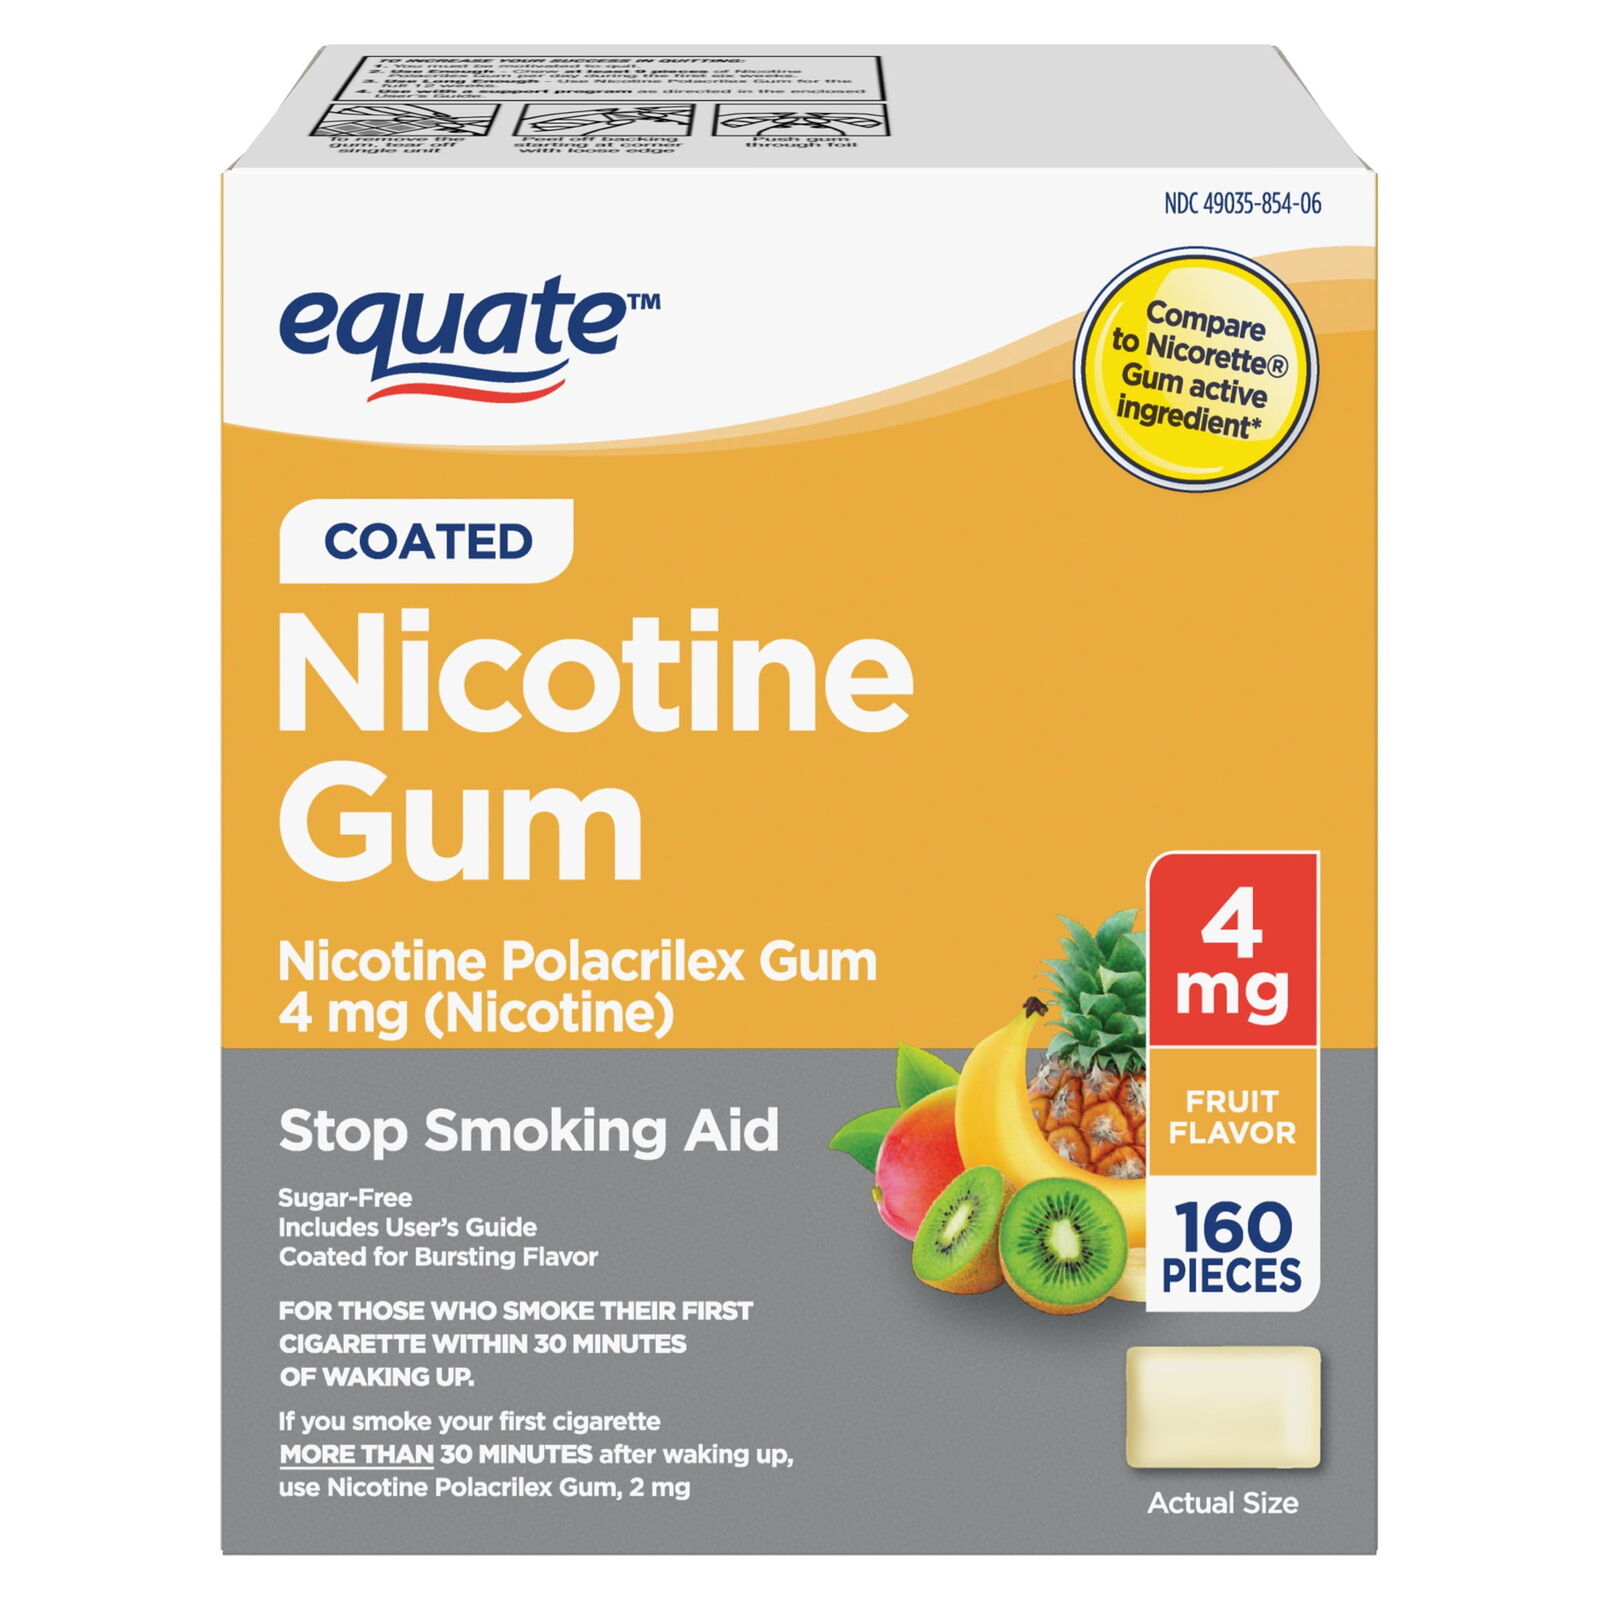 Equate Coated Nicotine Polacrilex Gum, 4 mg, Fruit Flavor, Stop Smoking Aid